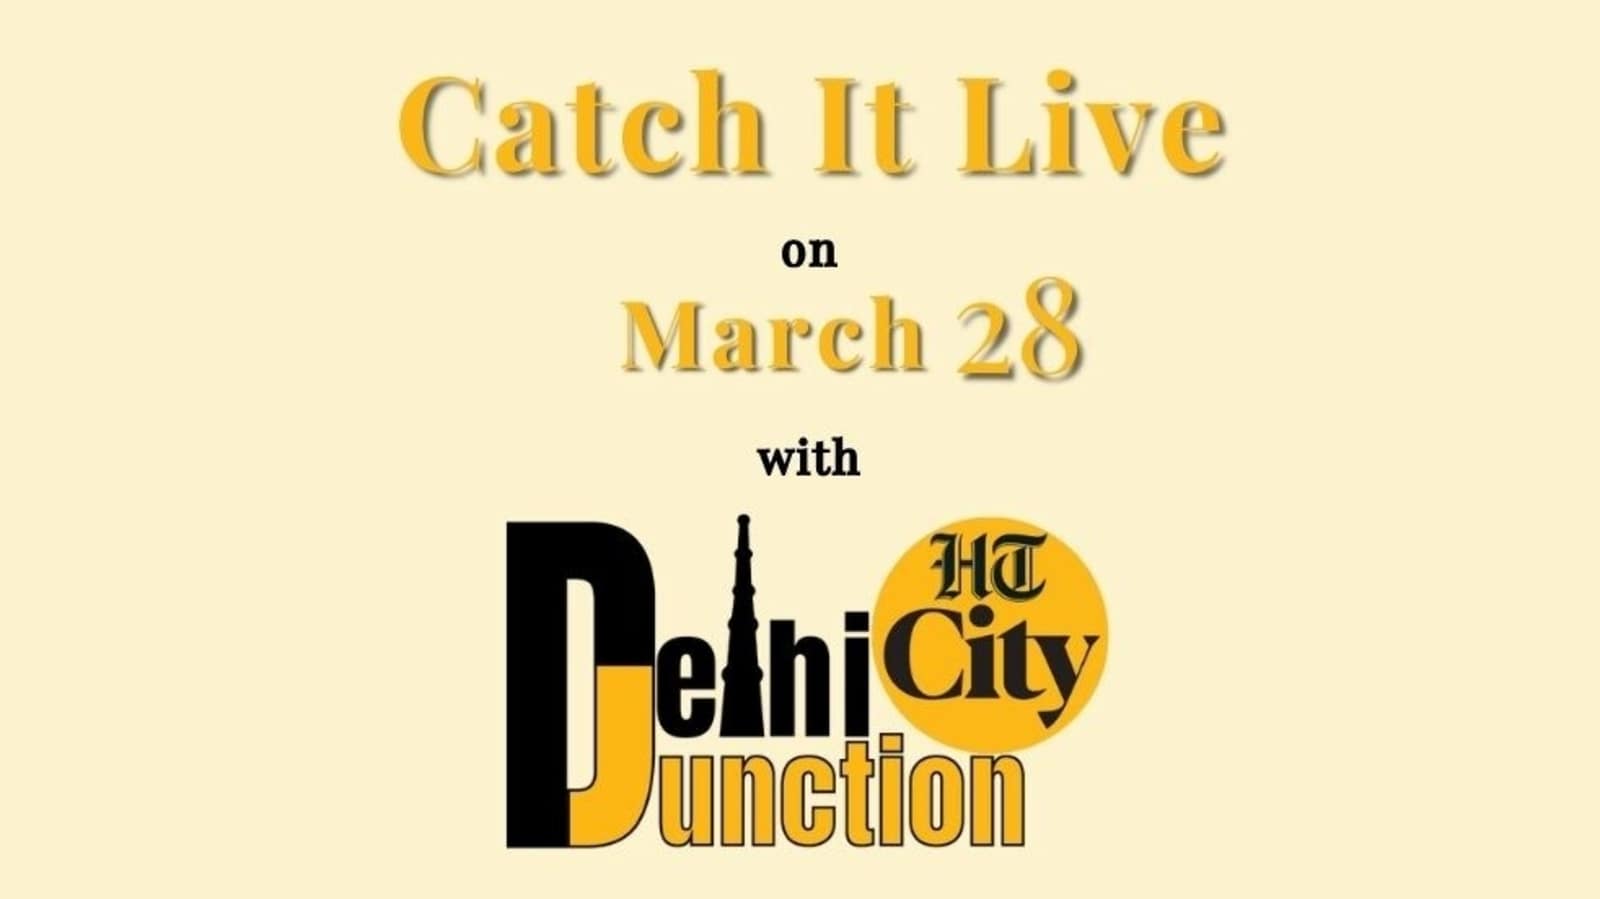 HT City Delhi Junction: Catch It Live on March 28